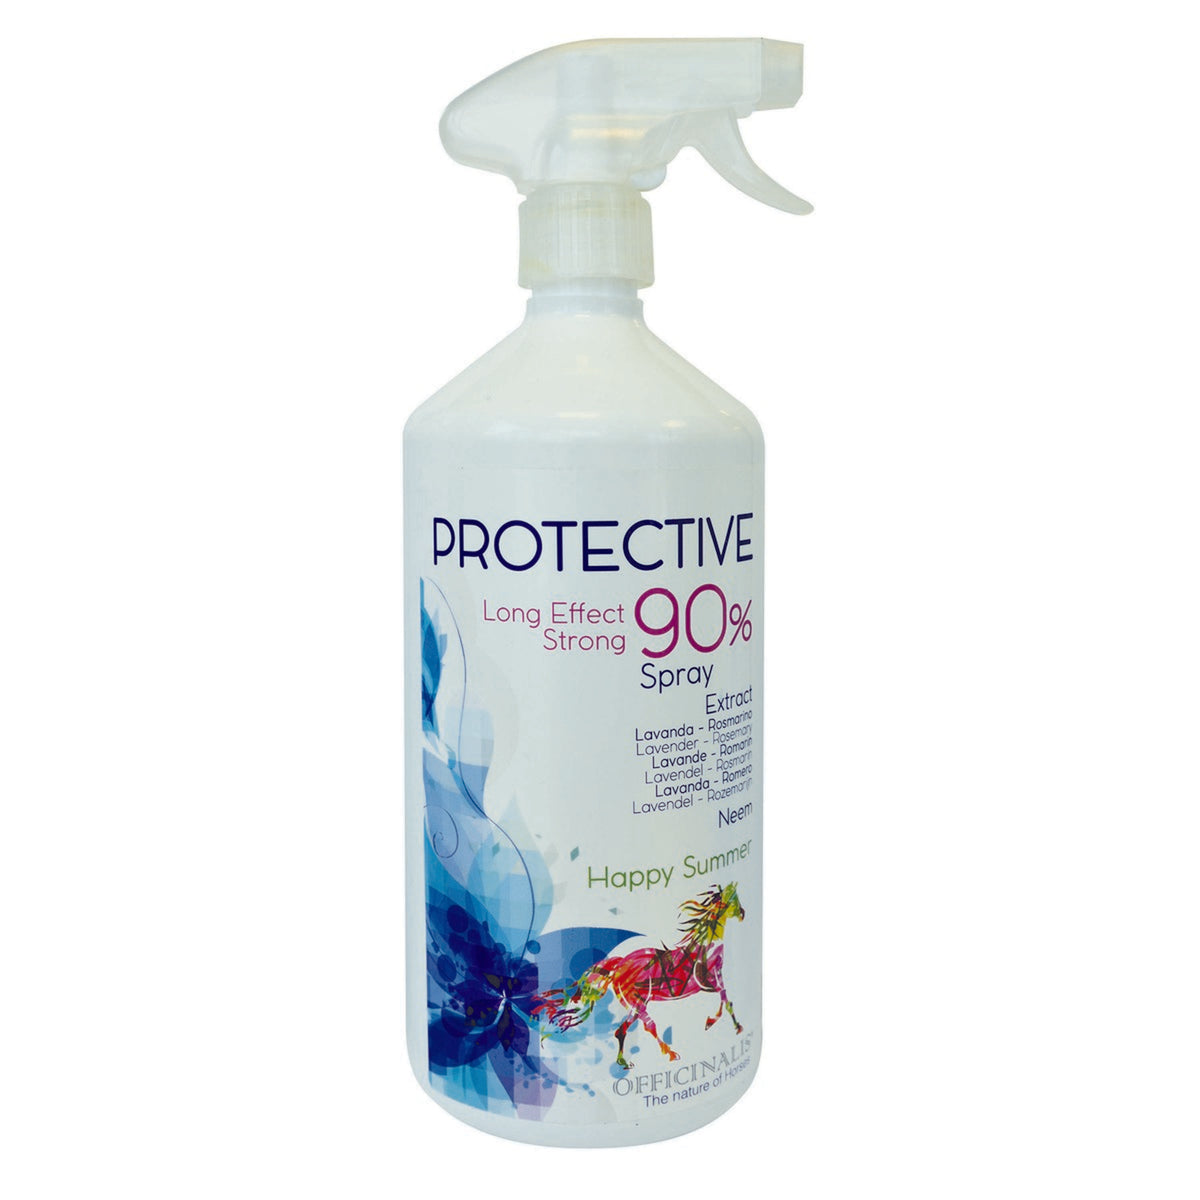 Officinalis 90% Protektiv Spray